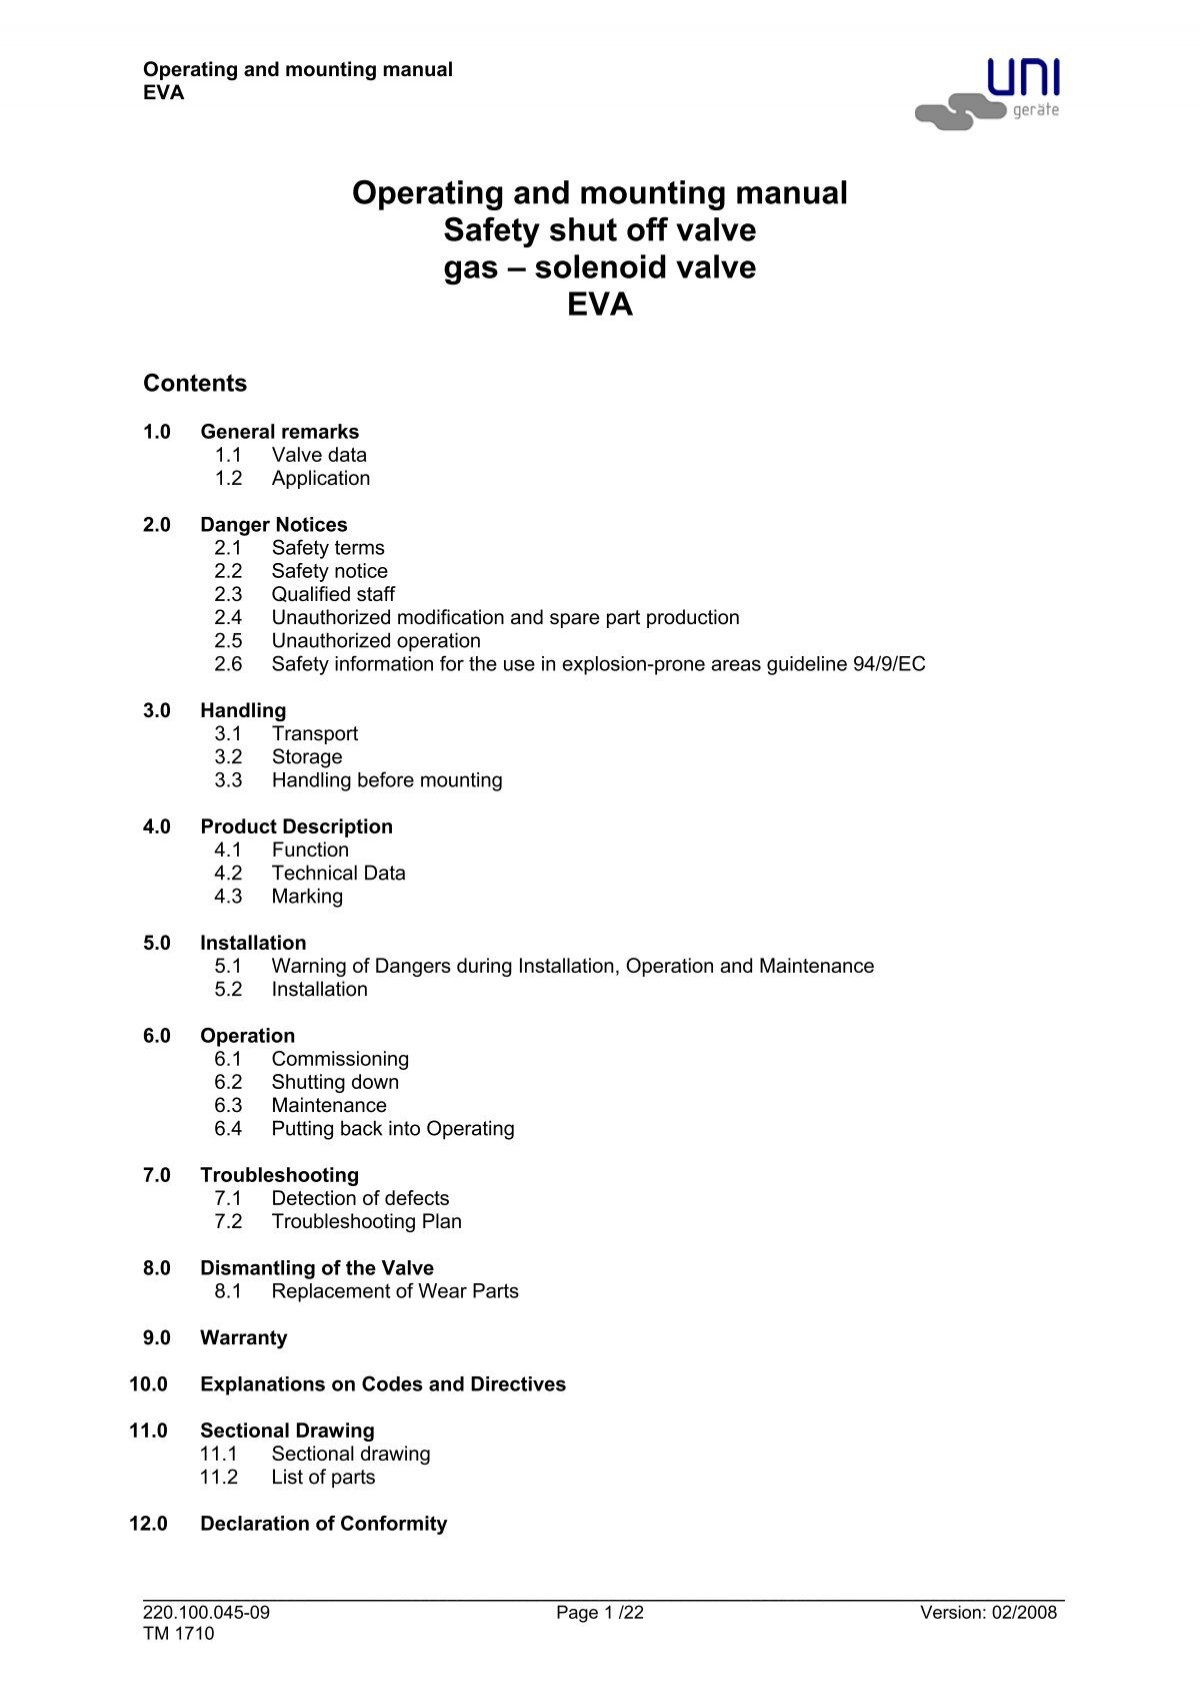 UNI-Gerate EVSA Series Normally Closed Solenoid Valves